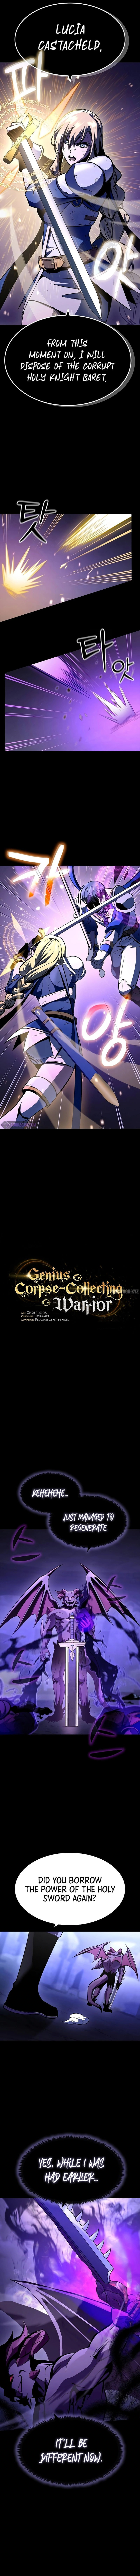 genius-corpse-collecting-warrior-chap-27-7